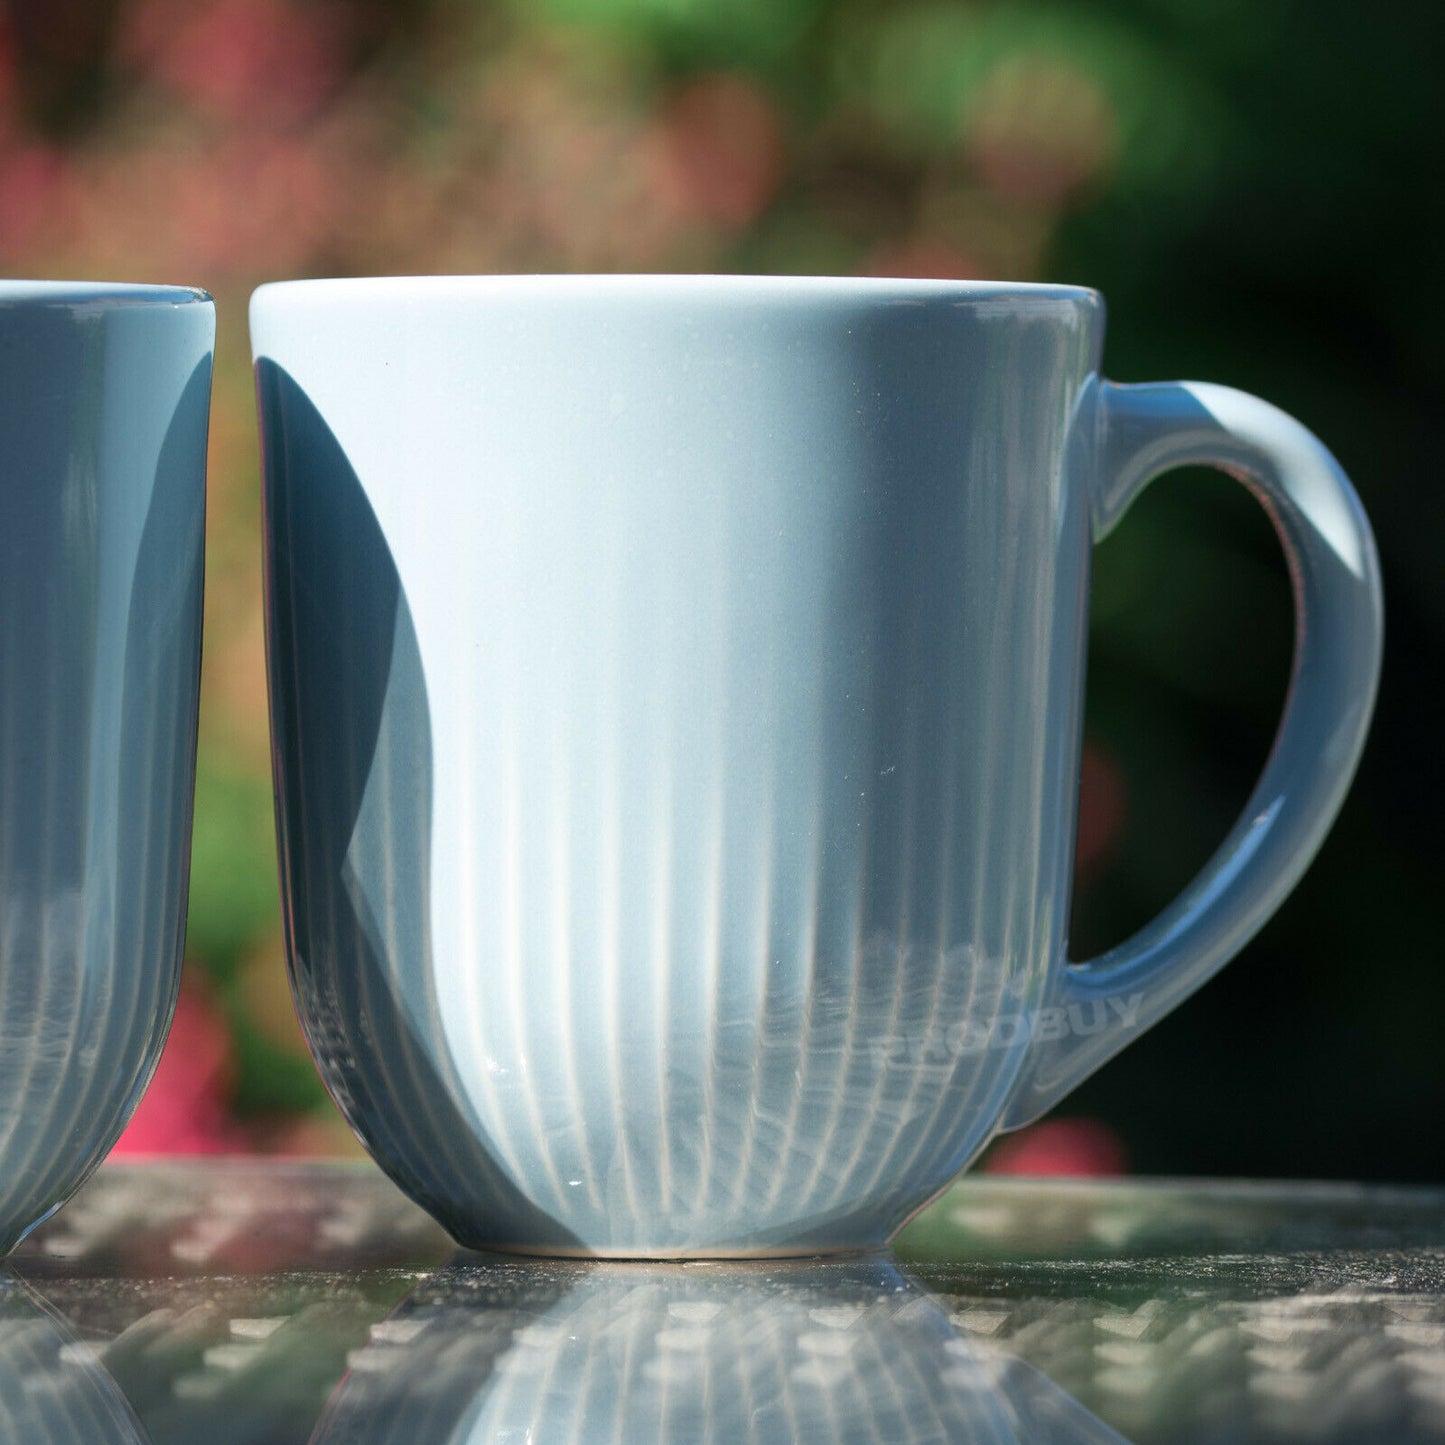 Set of 2 Pastel Blue Ribbed Coffee Mugs